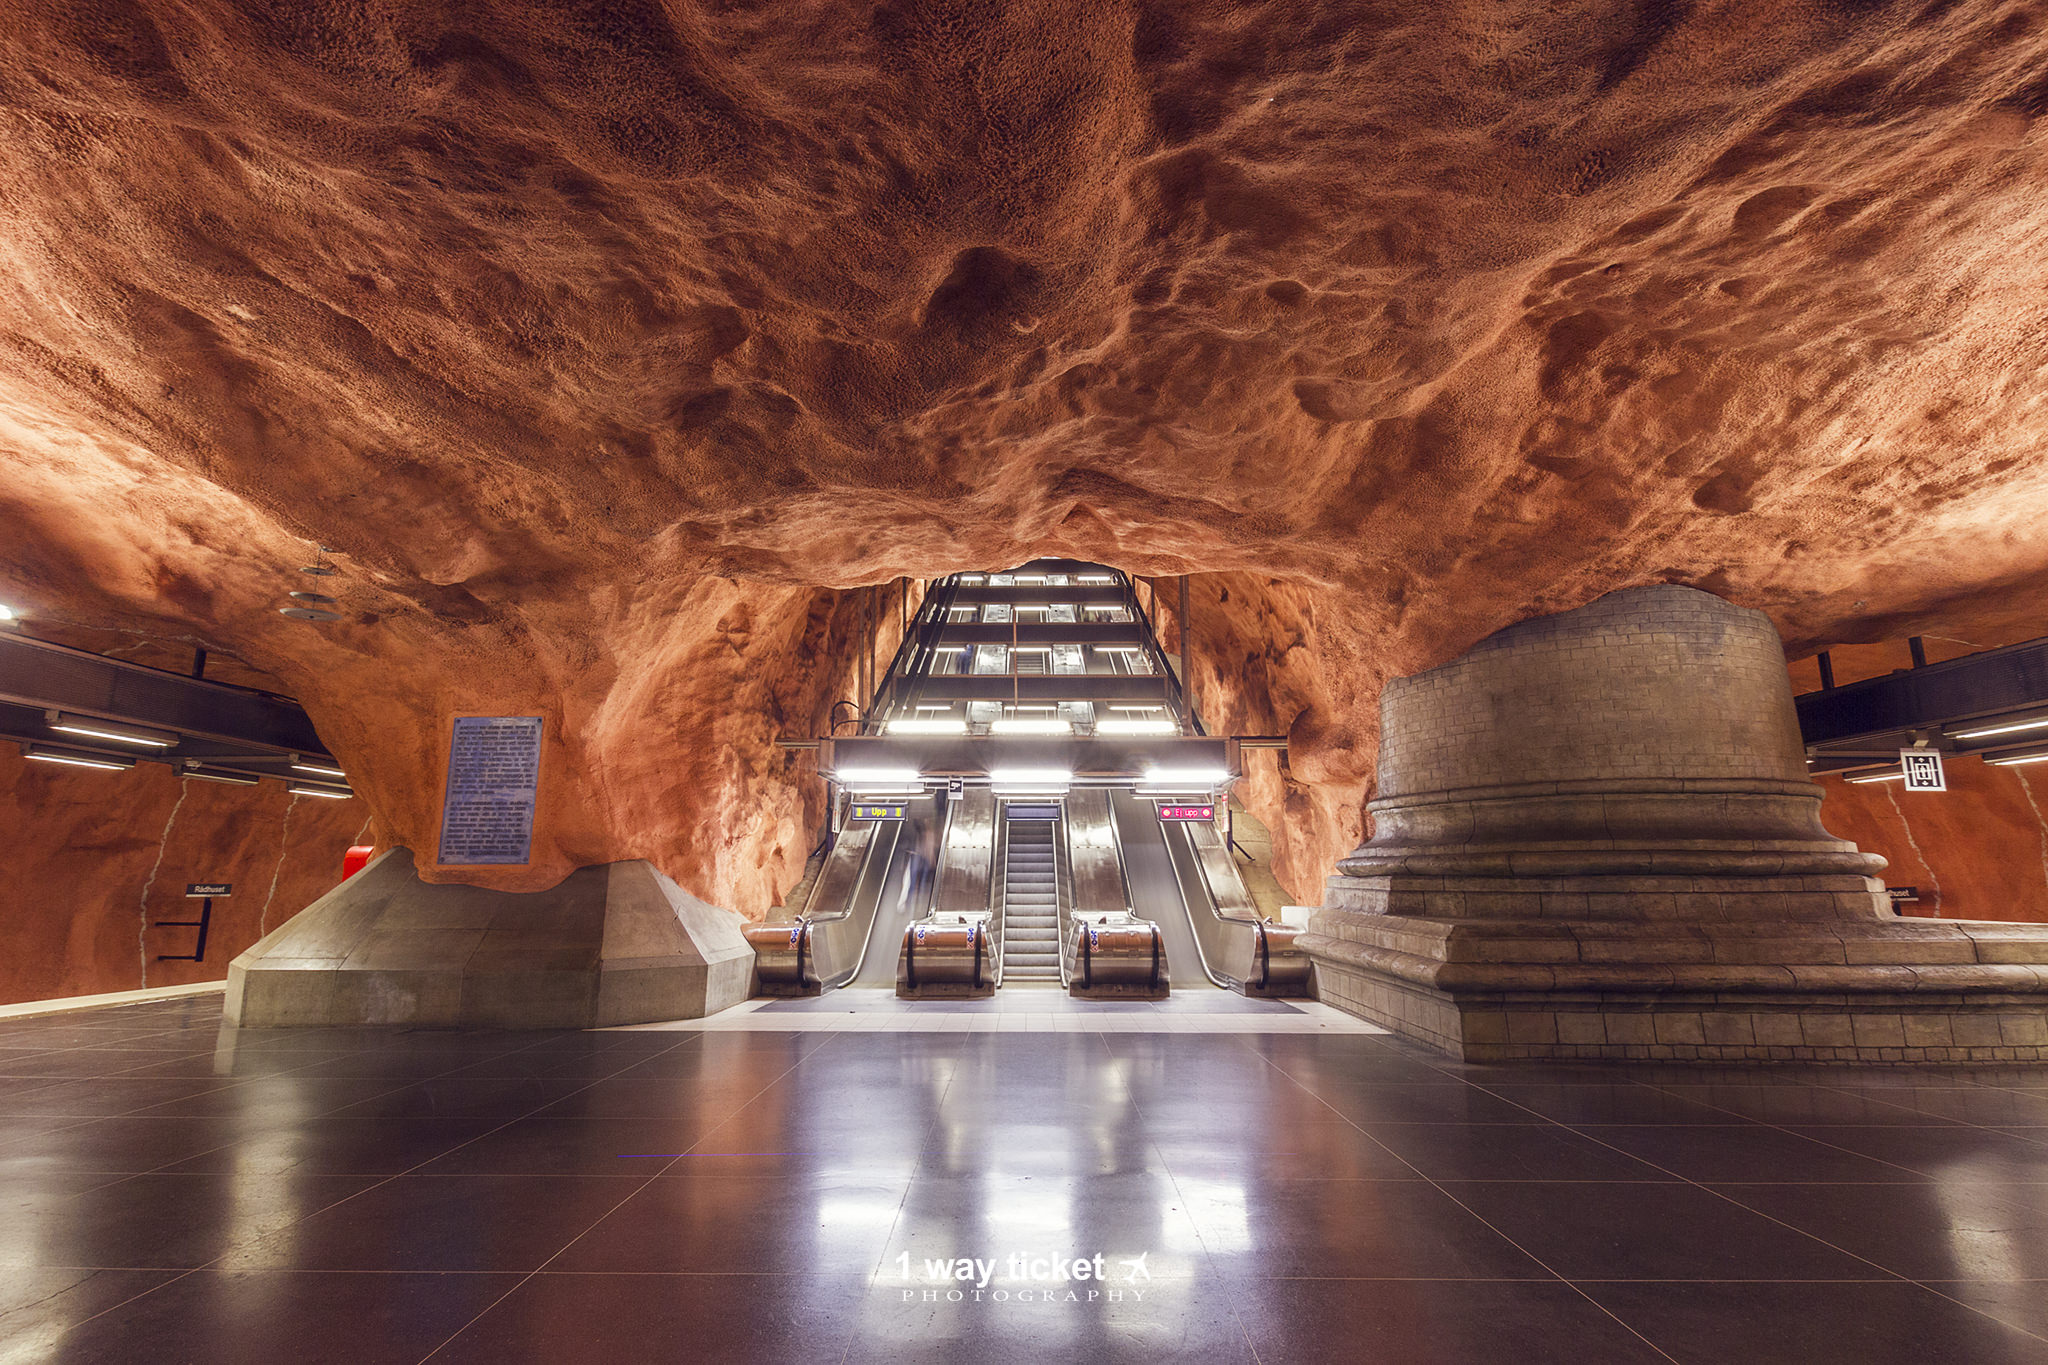 Rådhuset tunnelbana metro stairs art underground photography stockholm